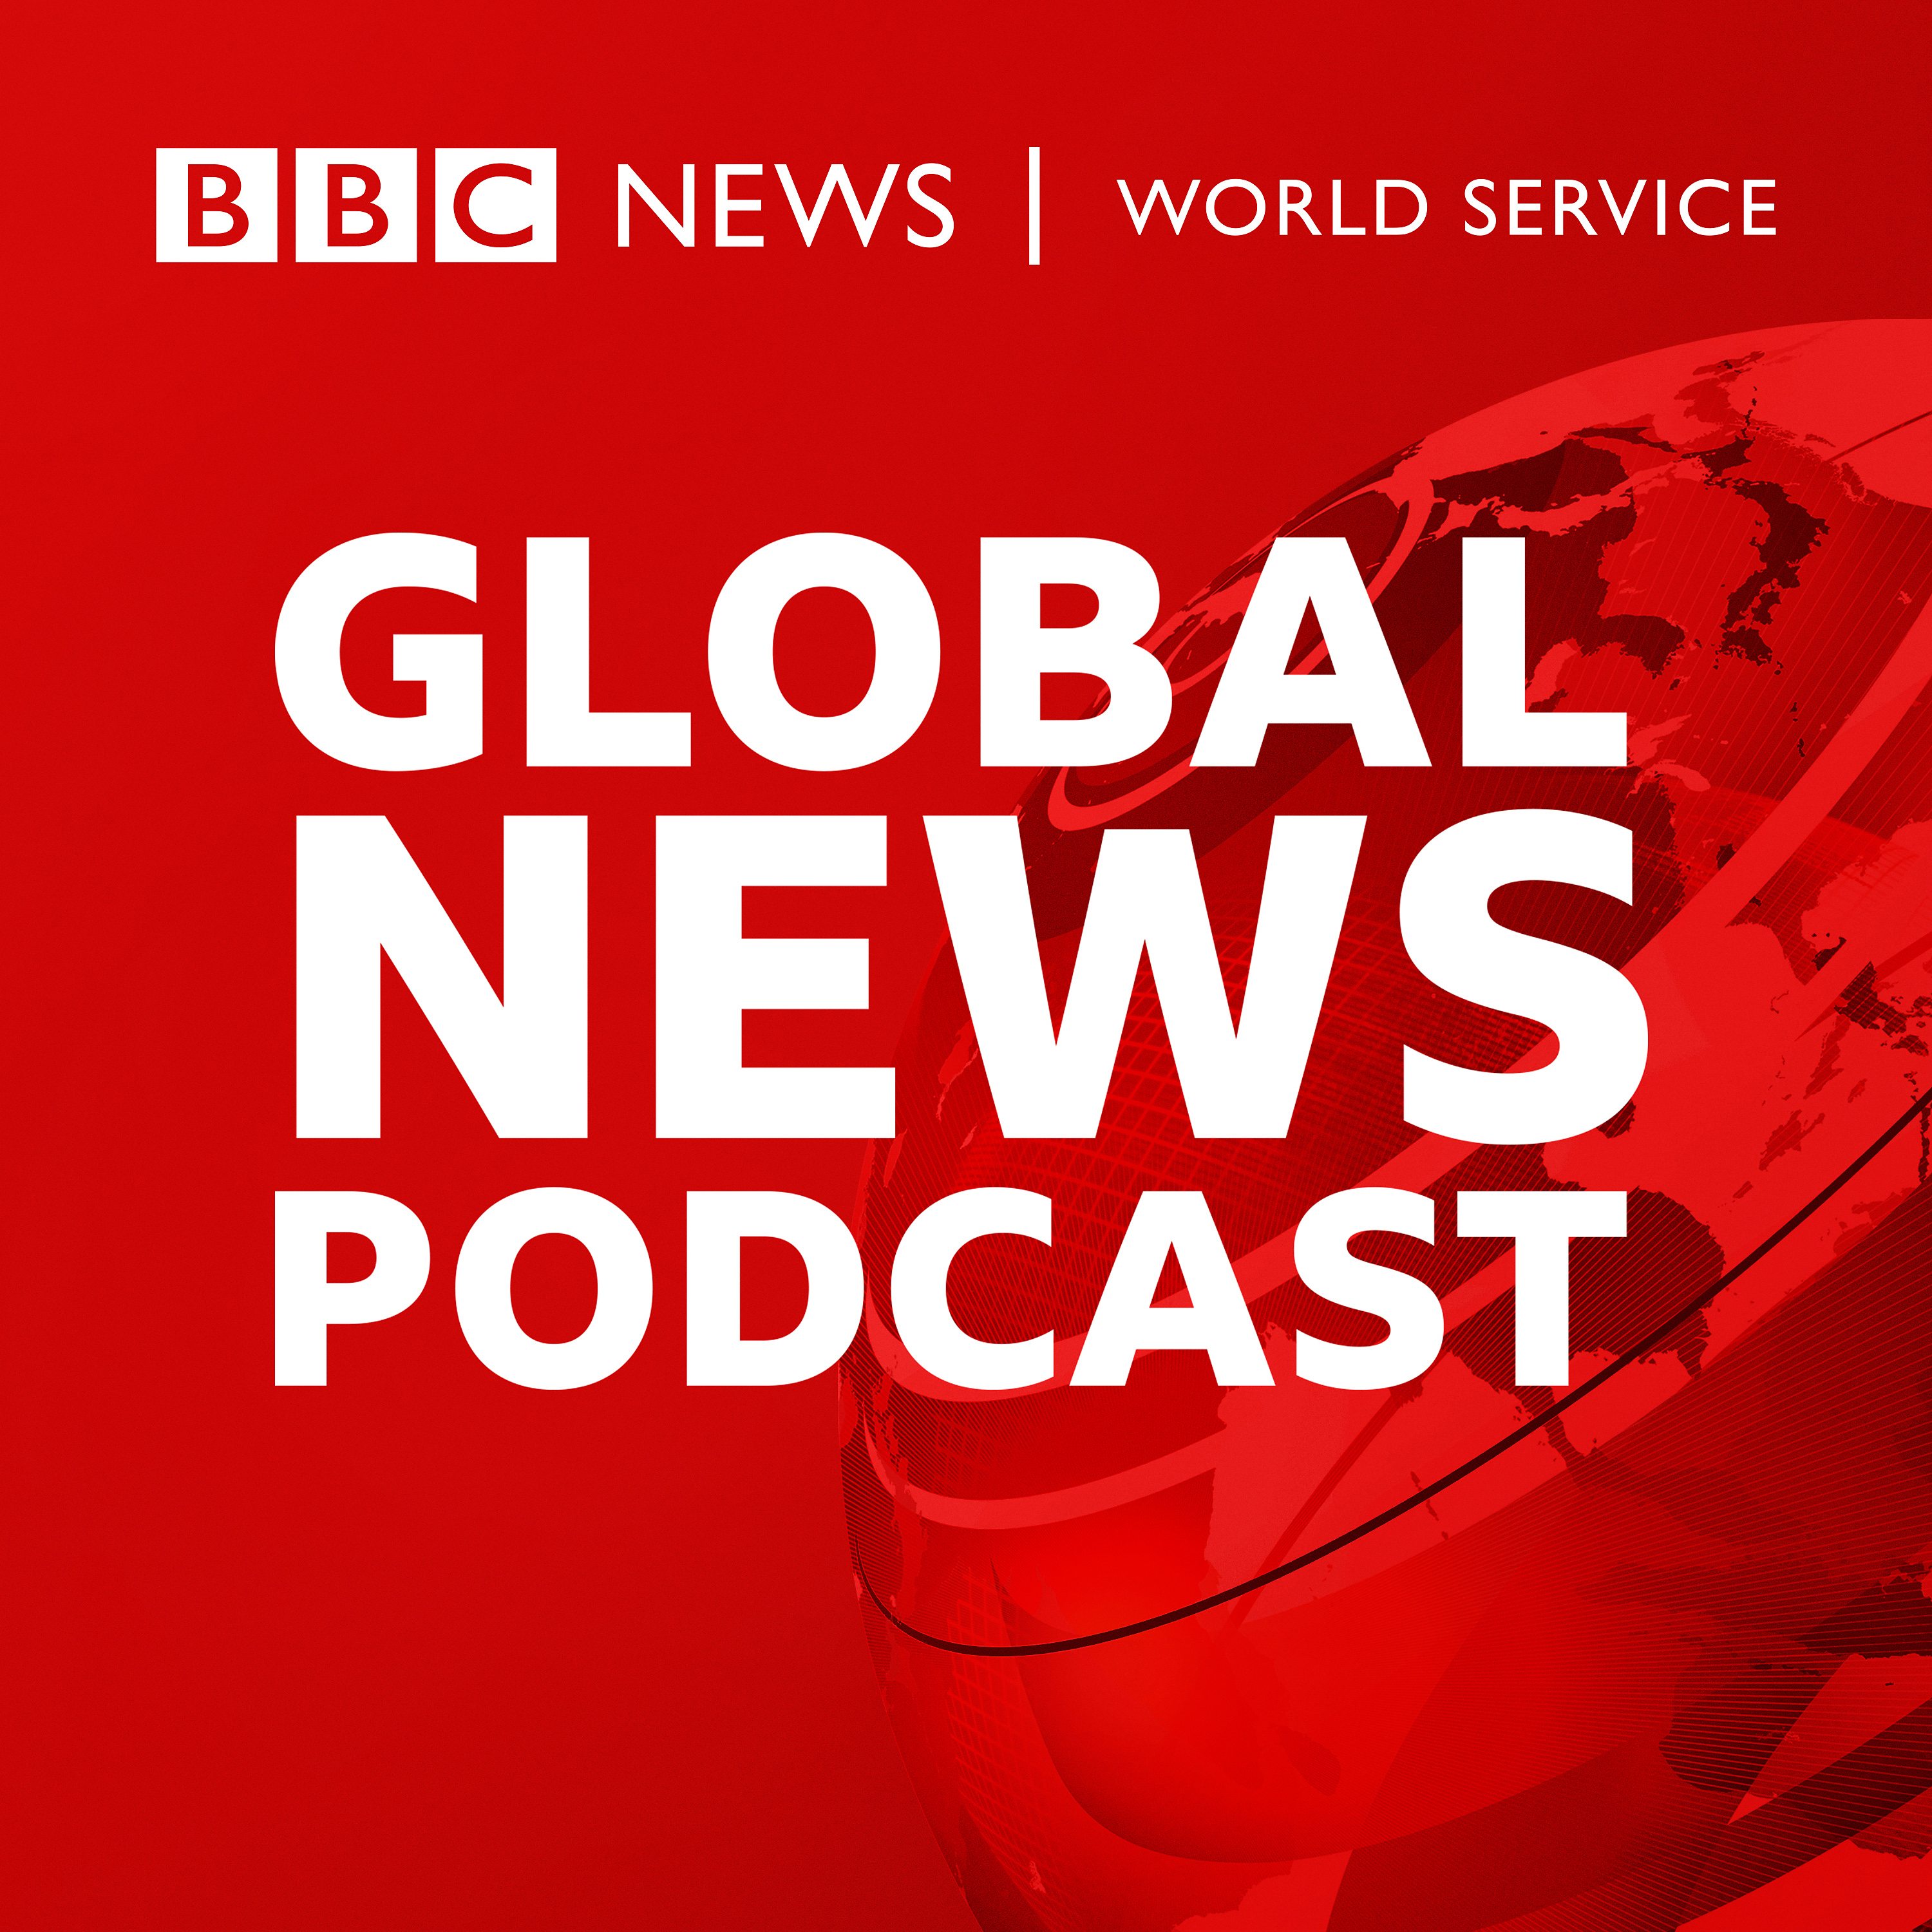 Global News Podcast BBC